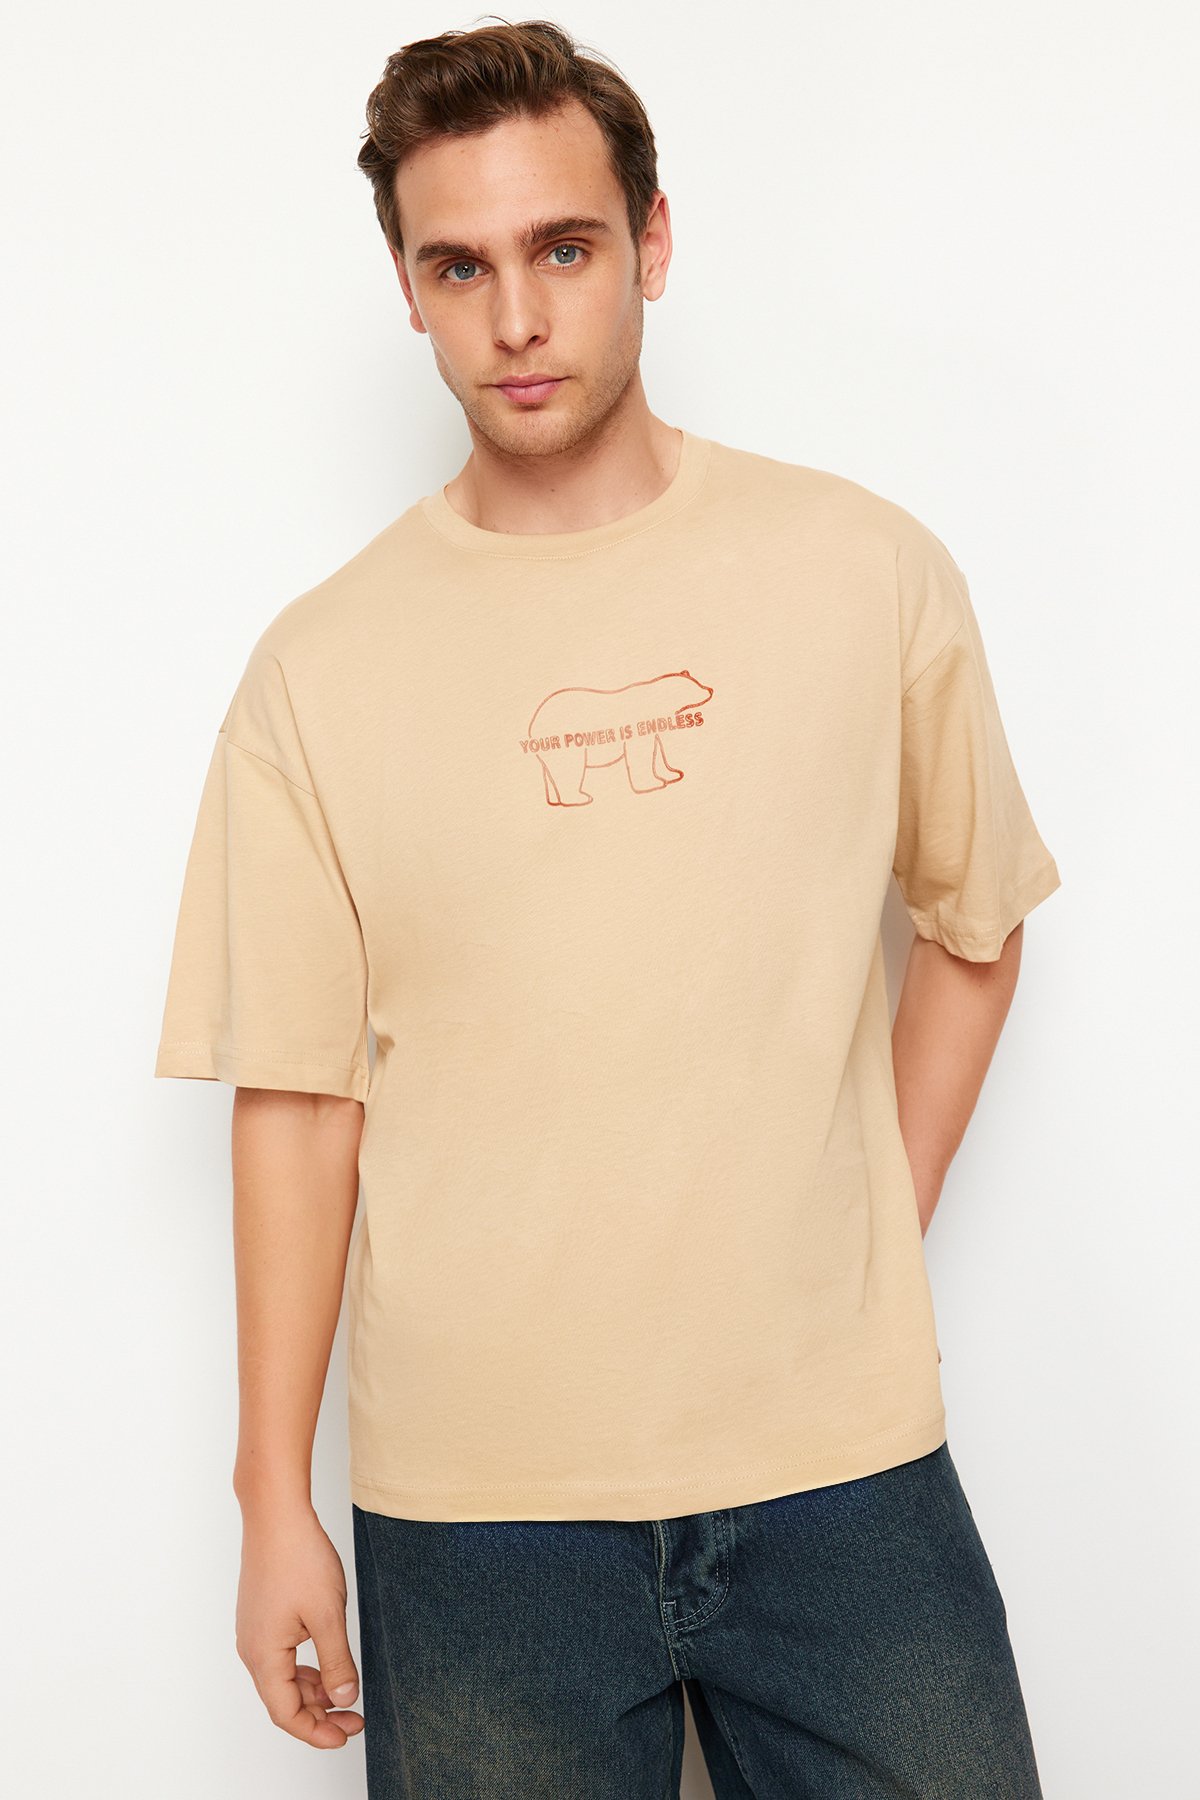 Trendyol Mink Oversize/Wide Cut Gel Animal Printed 100% Cotton T-shirt